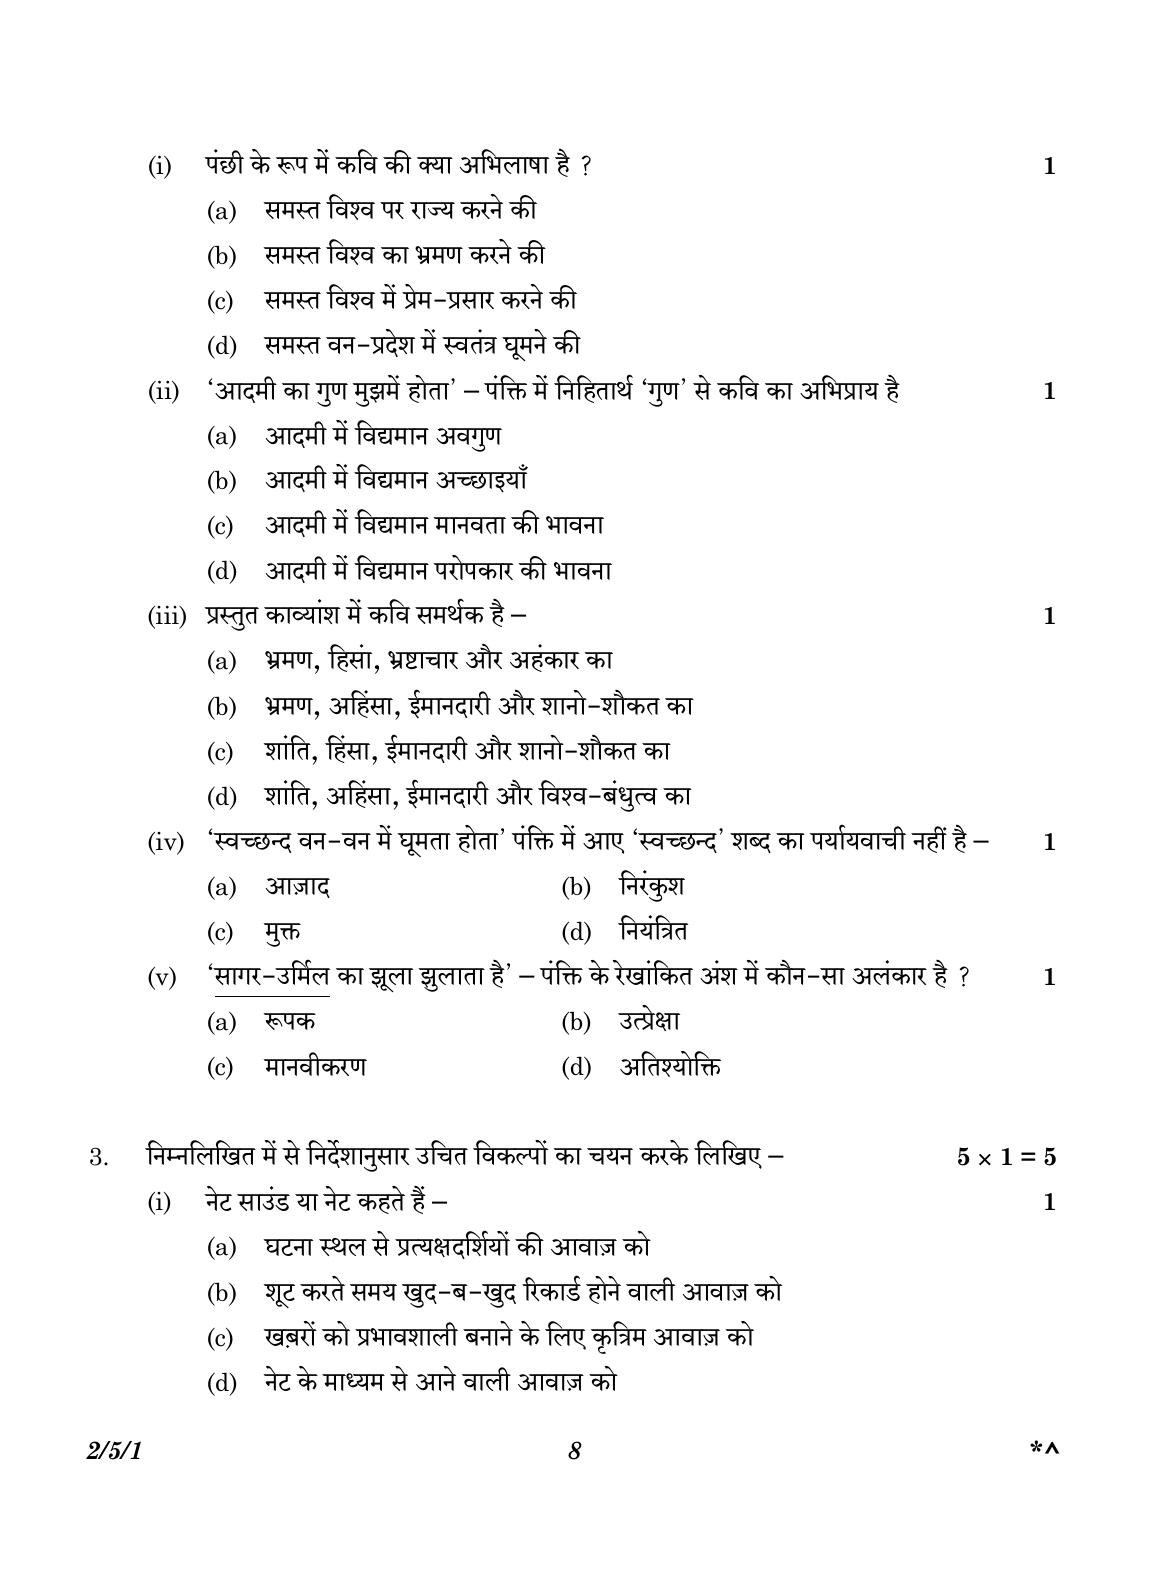 CBSE Class 12 2-5-1 Hindi Core version 2023 Question Paper - Page 8